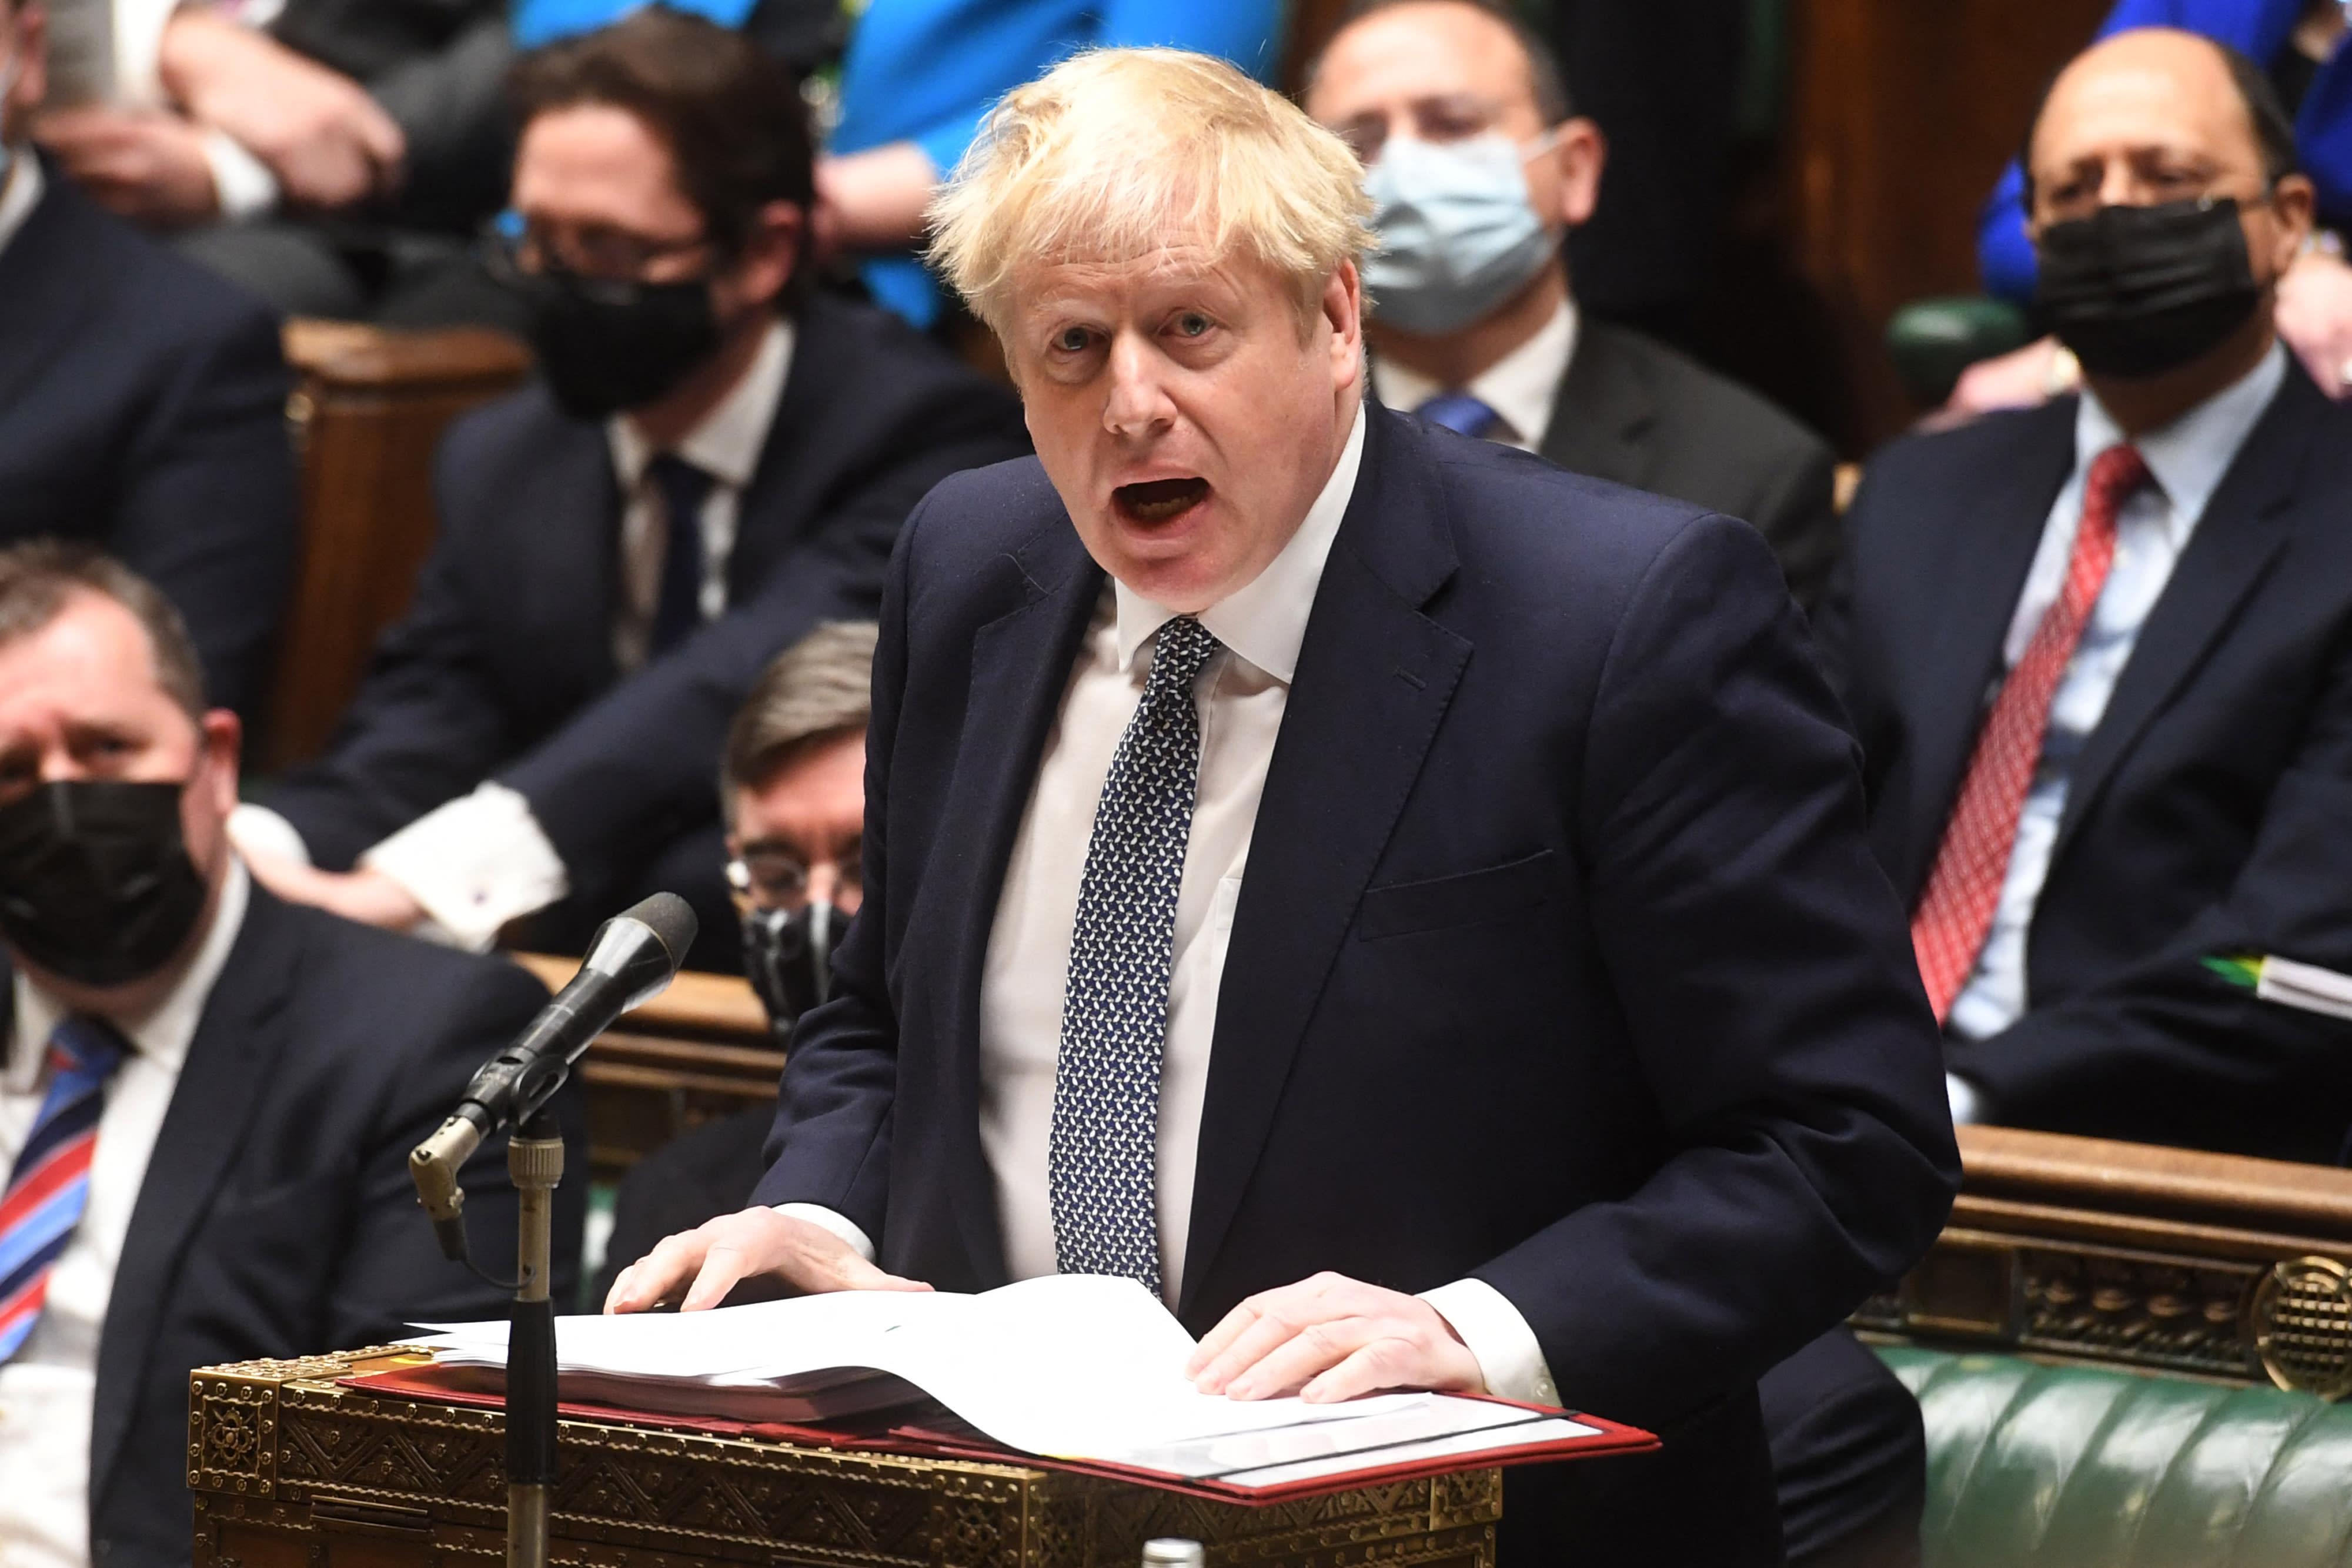 New 'partygate' revelations heap more pressure on UK PM Johnson